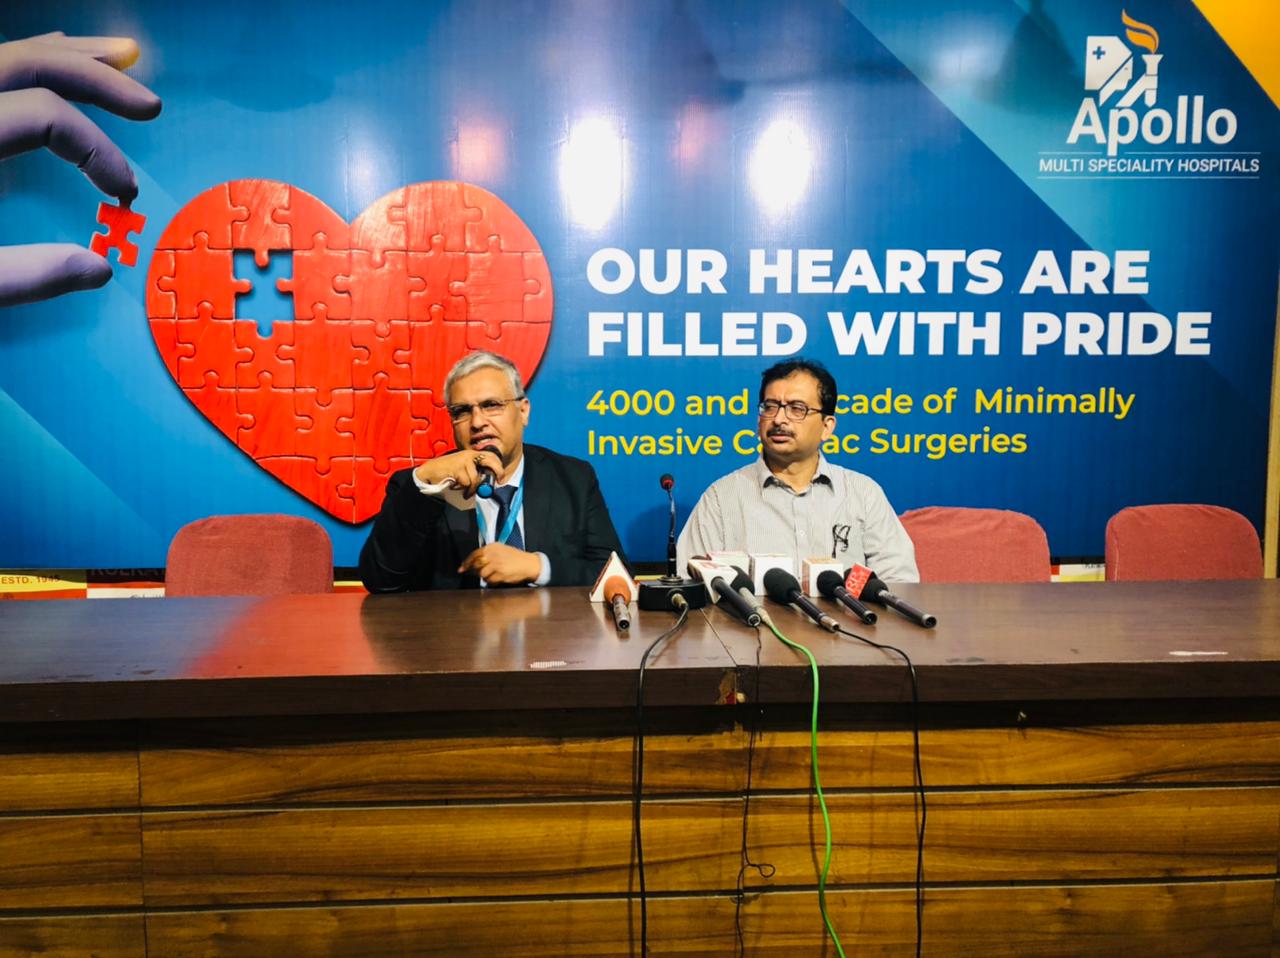 Apollo Multispeciality Hospitals Kolkata conducts over 4000 Minimally Invasive Cardiac Surgeries